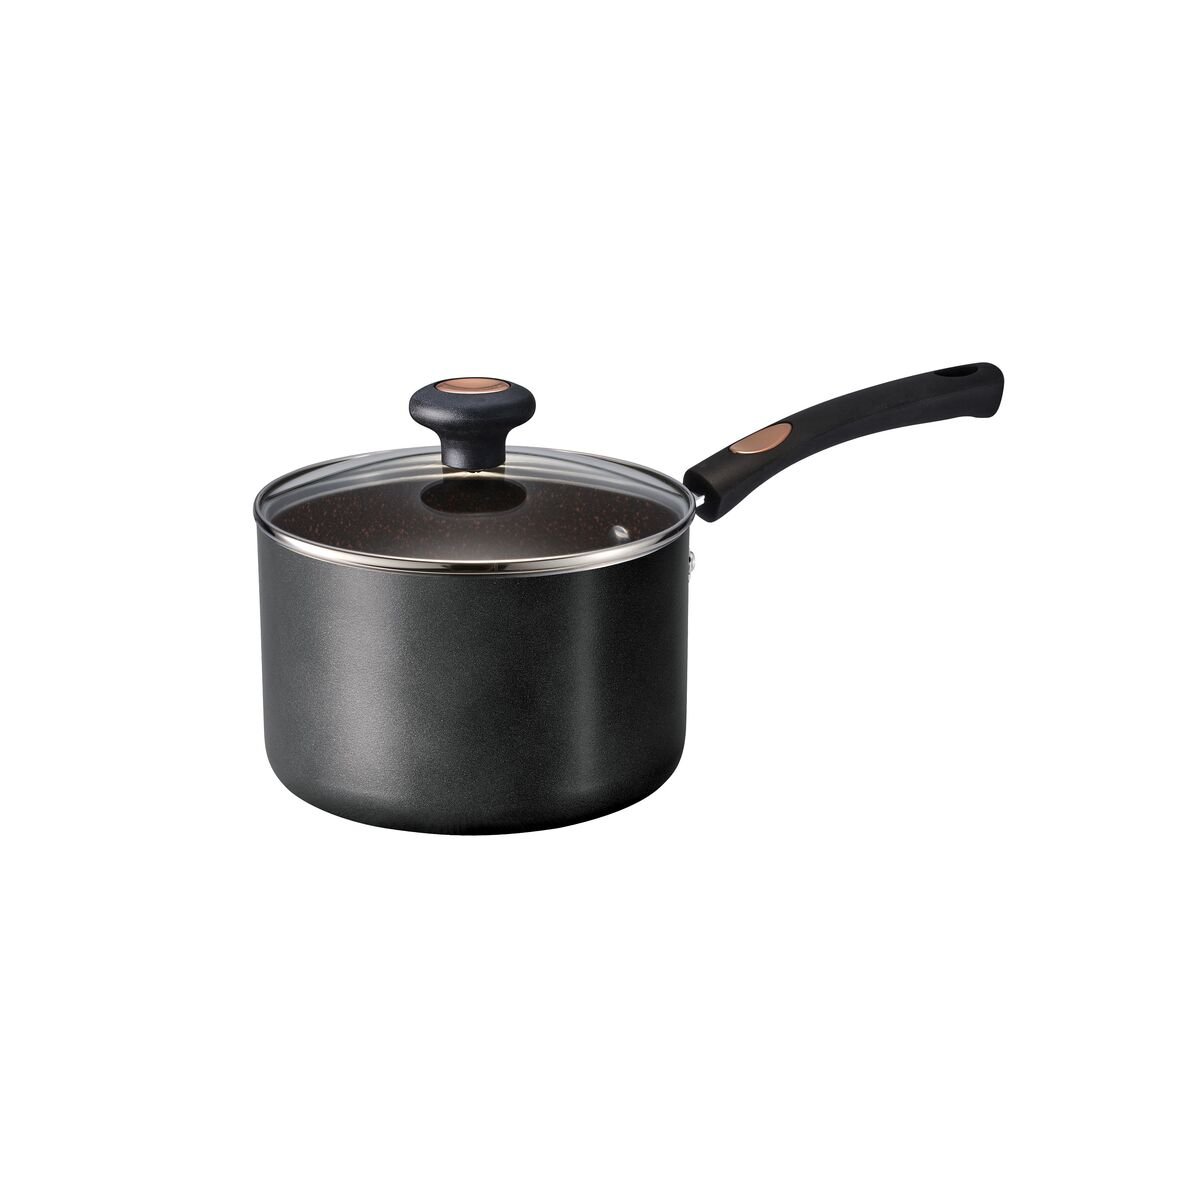 Tramontina Pots & Pans 3 qt. Aluminum Nonstick Sauce Pan